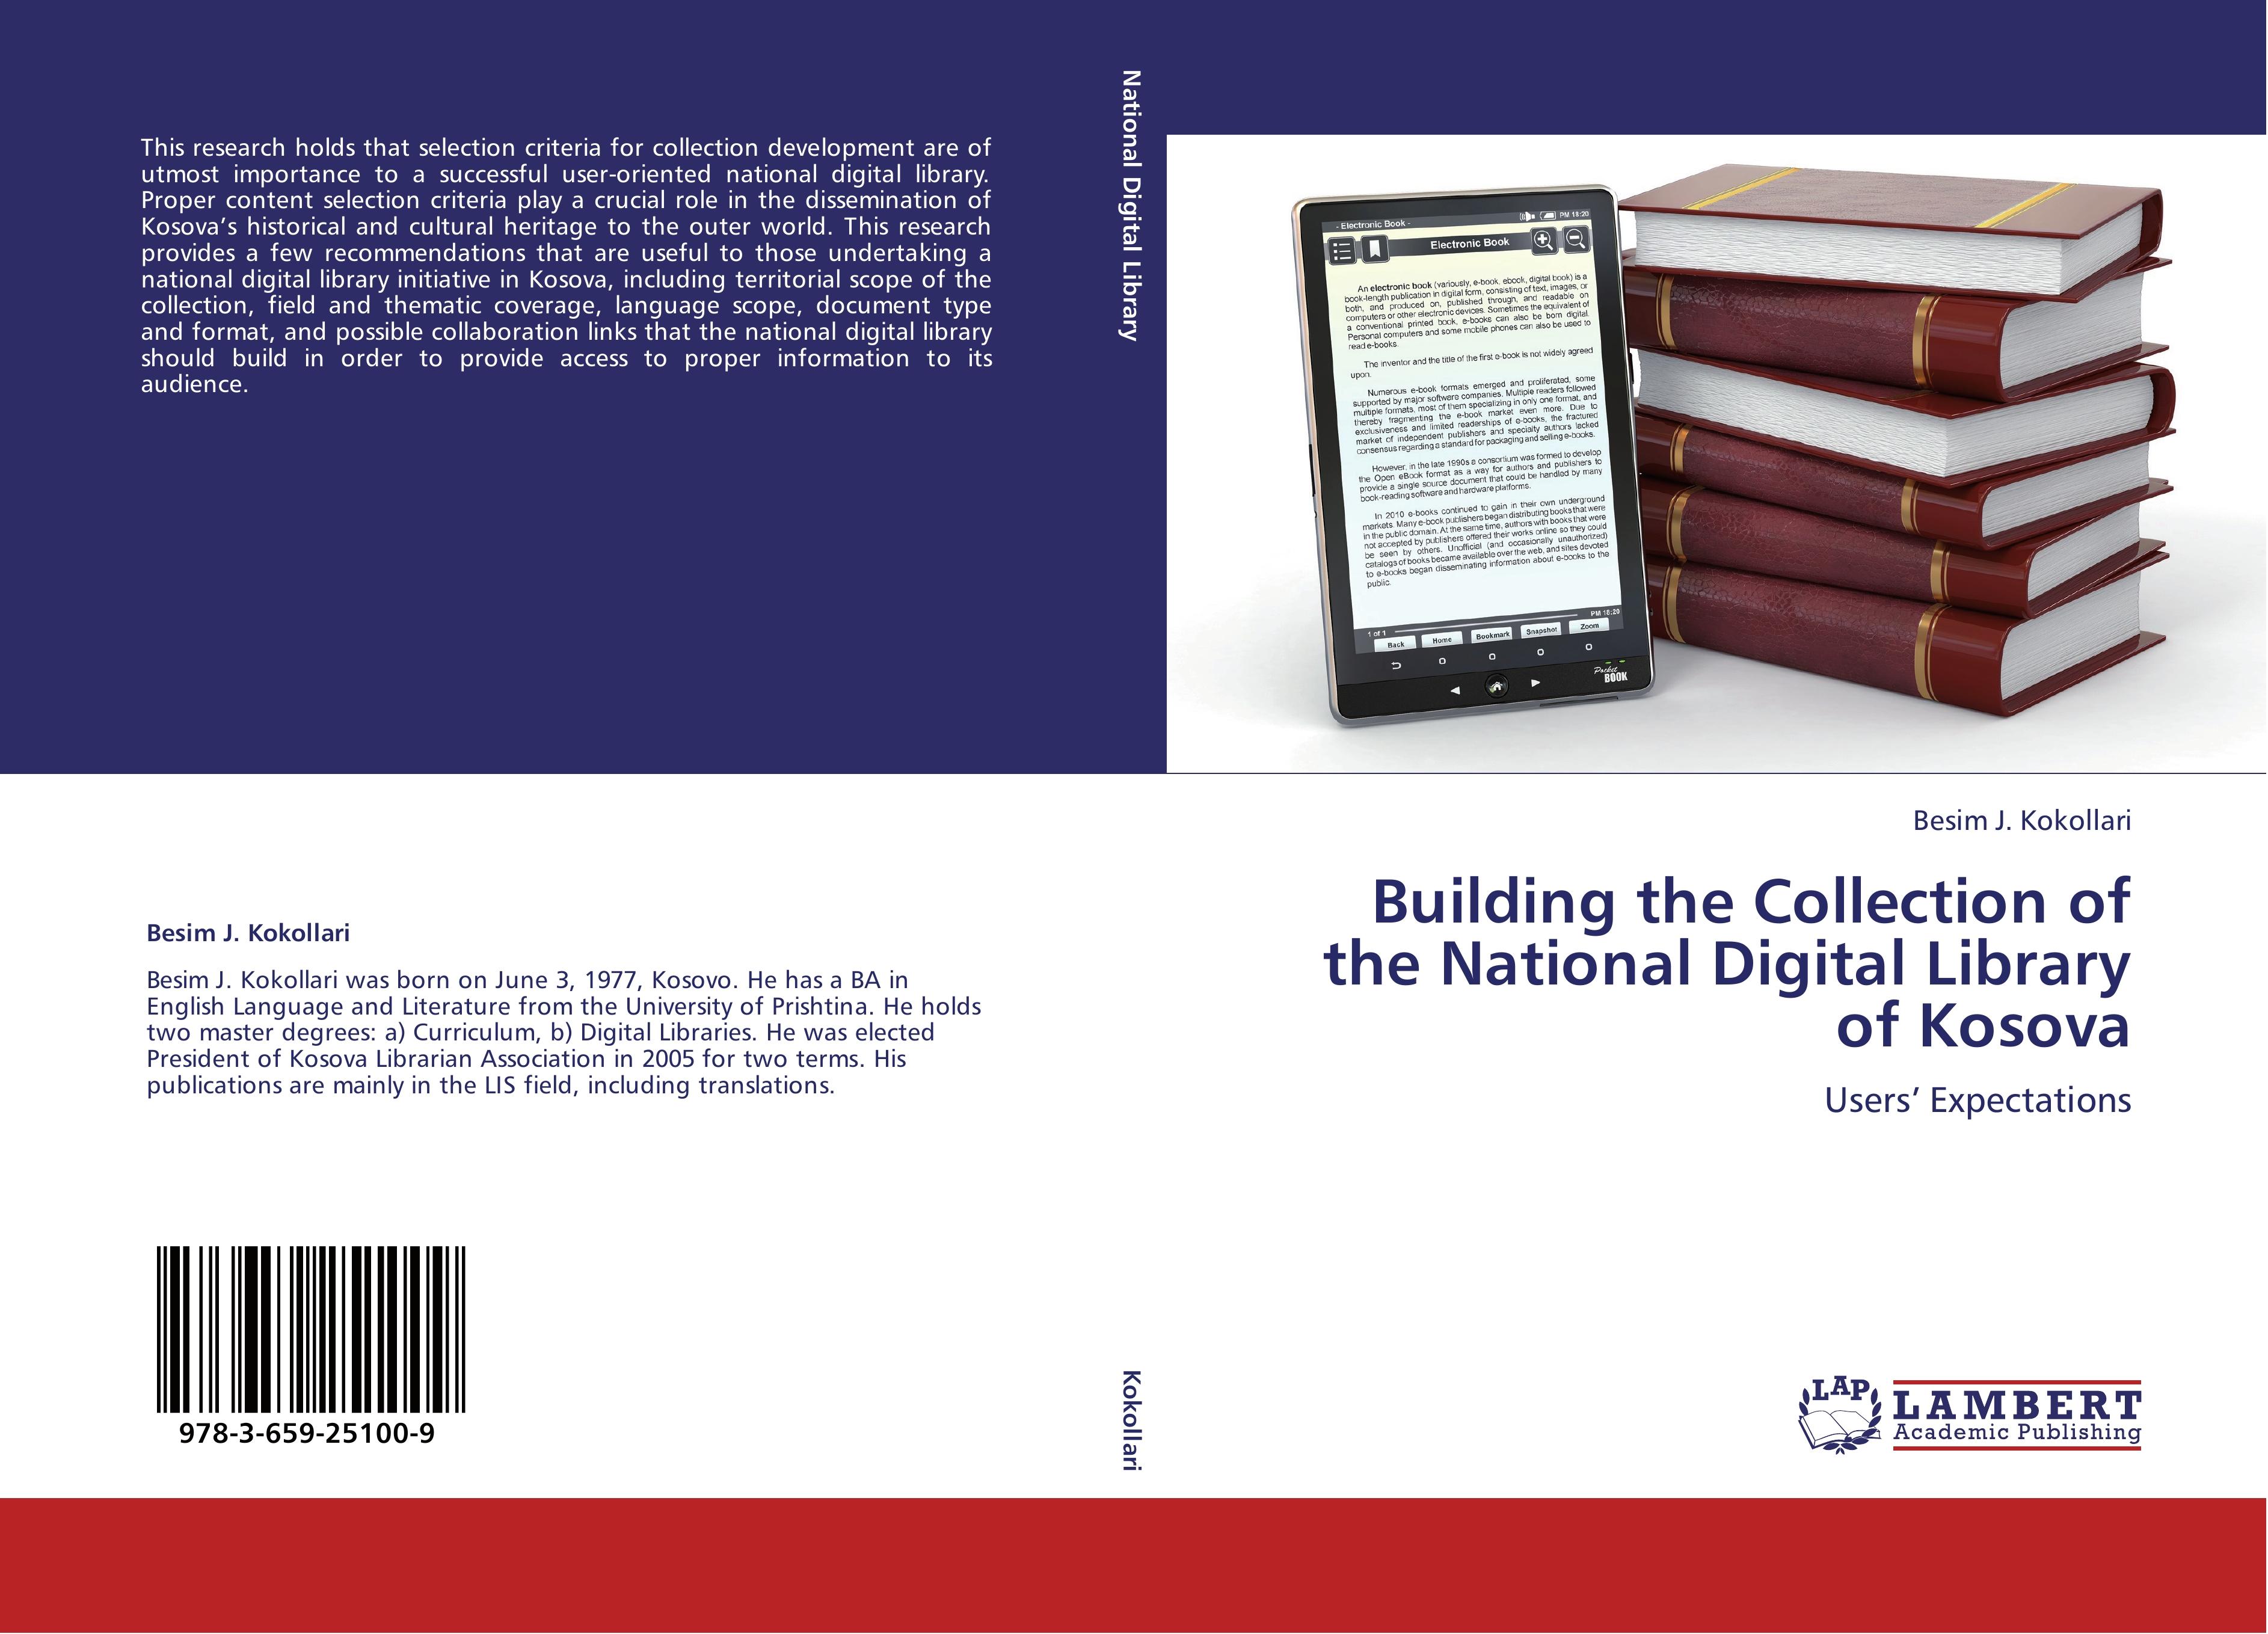 Building the Collection of the National Digital Library of Kosova - Besim J. Kokollari